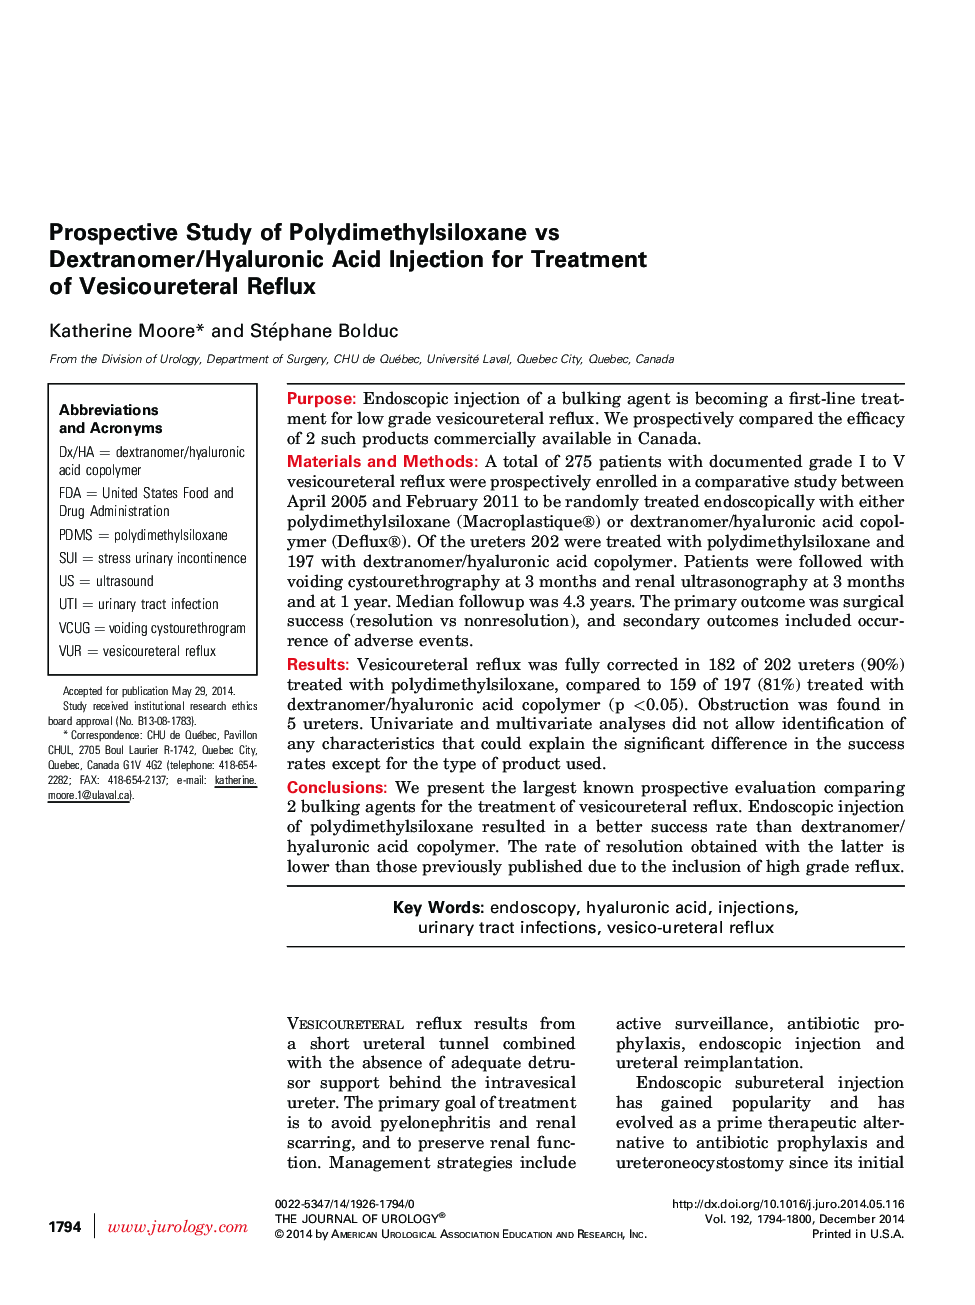 Prospective Study of Polydimethylsiloxane vs Dextranomer/Hyaluronic Acid Injection for Treatment of Vesicoureteral Reflux 